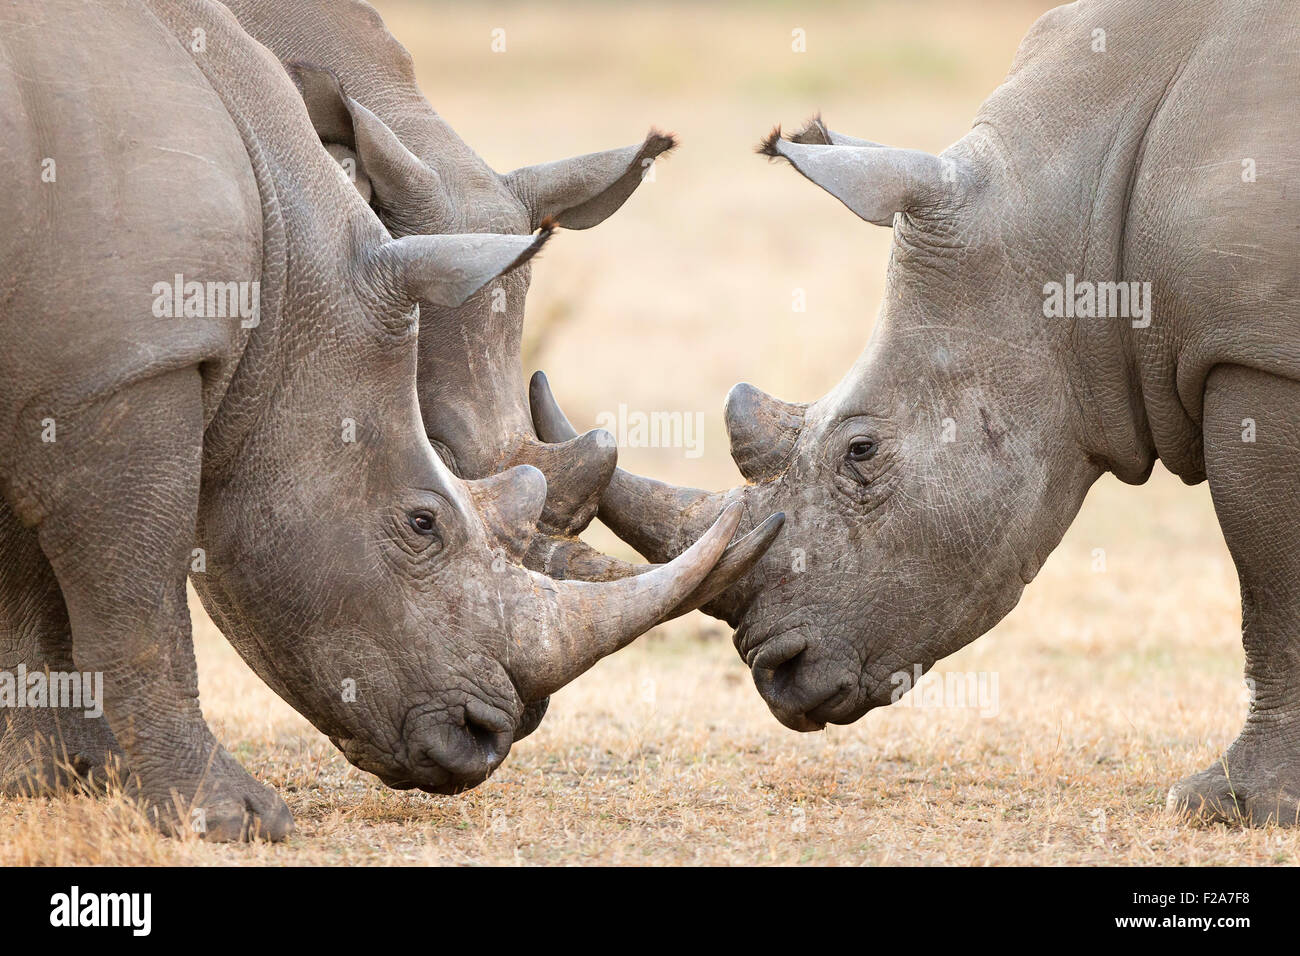 rhinoceros horns for sale